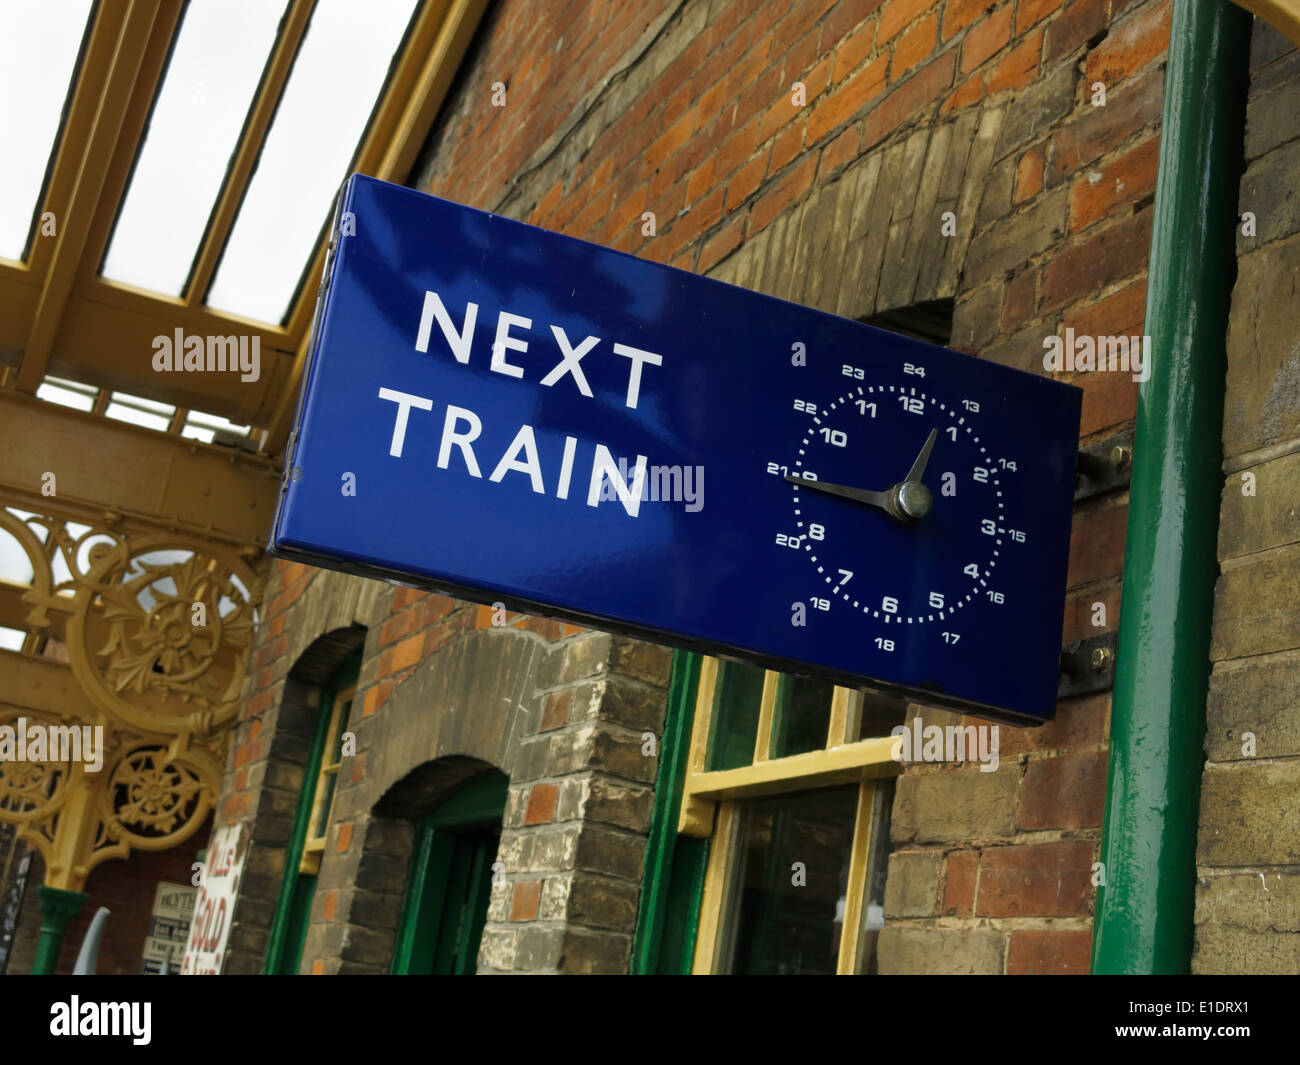 Next train sign on Sheringham railway station, North Norfolk, UK. Stock Photo